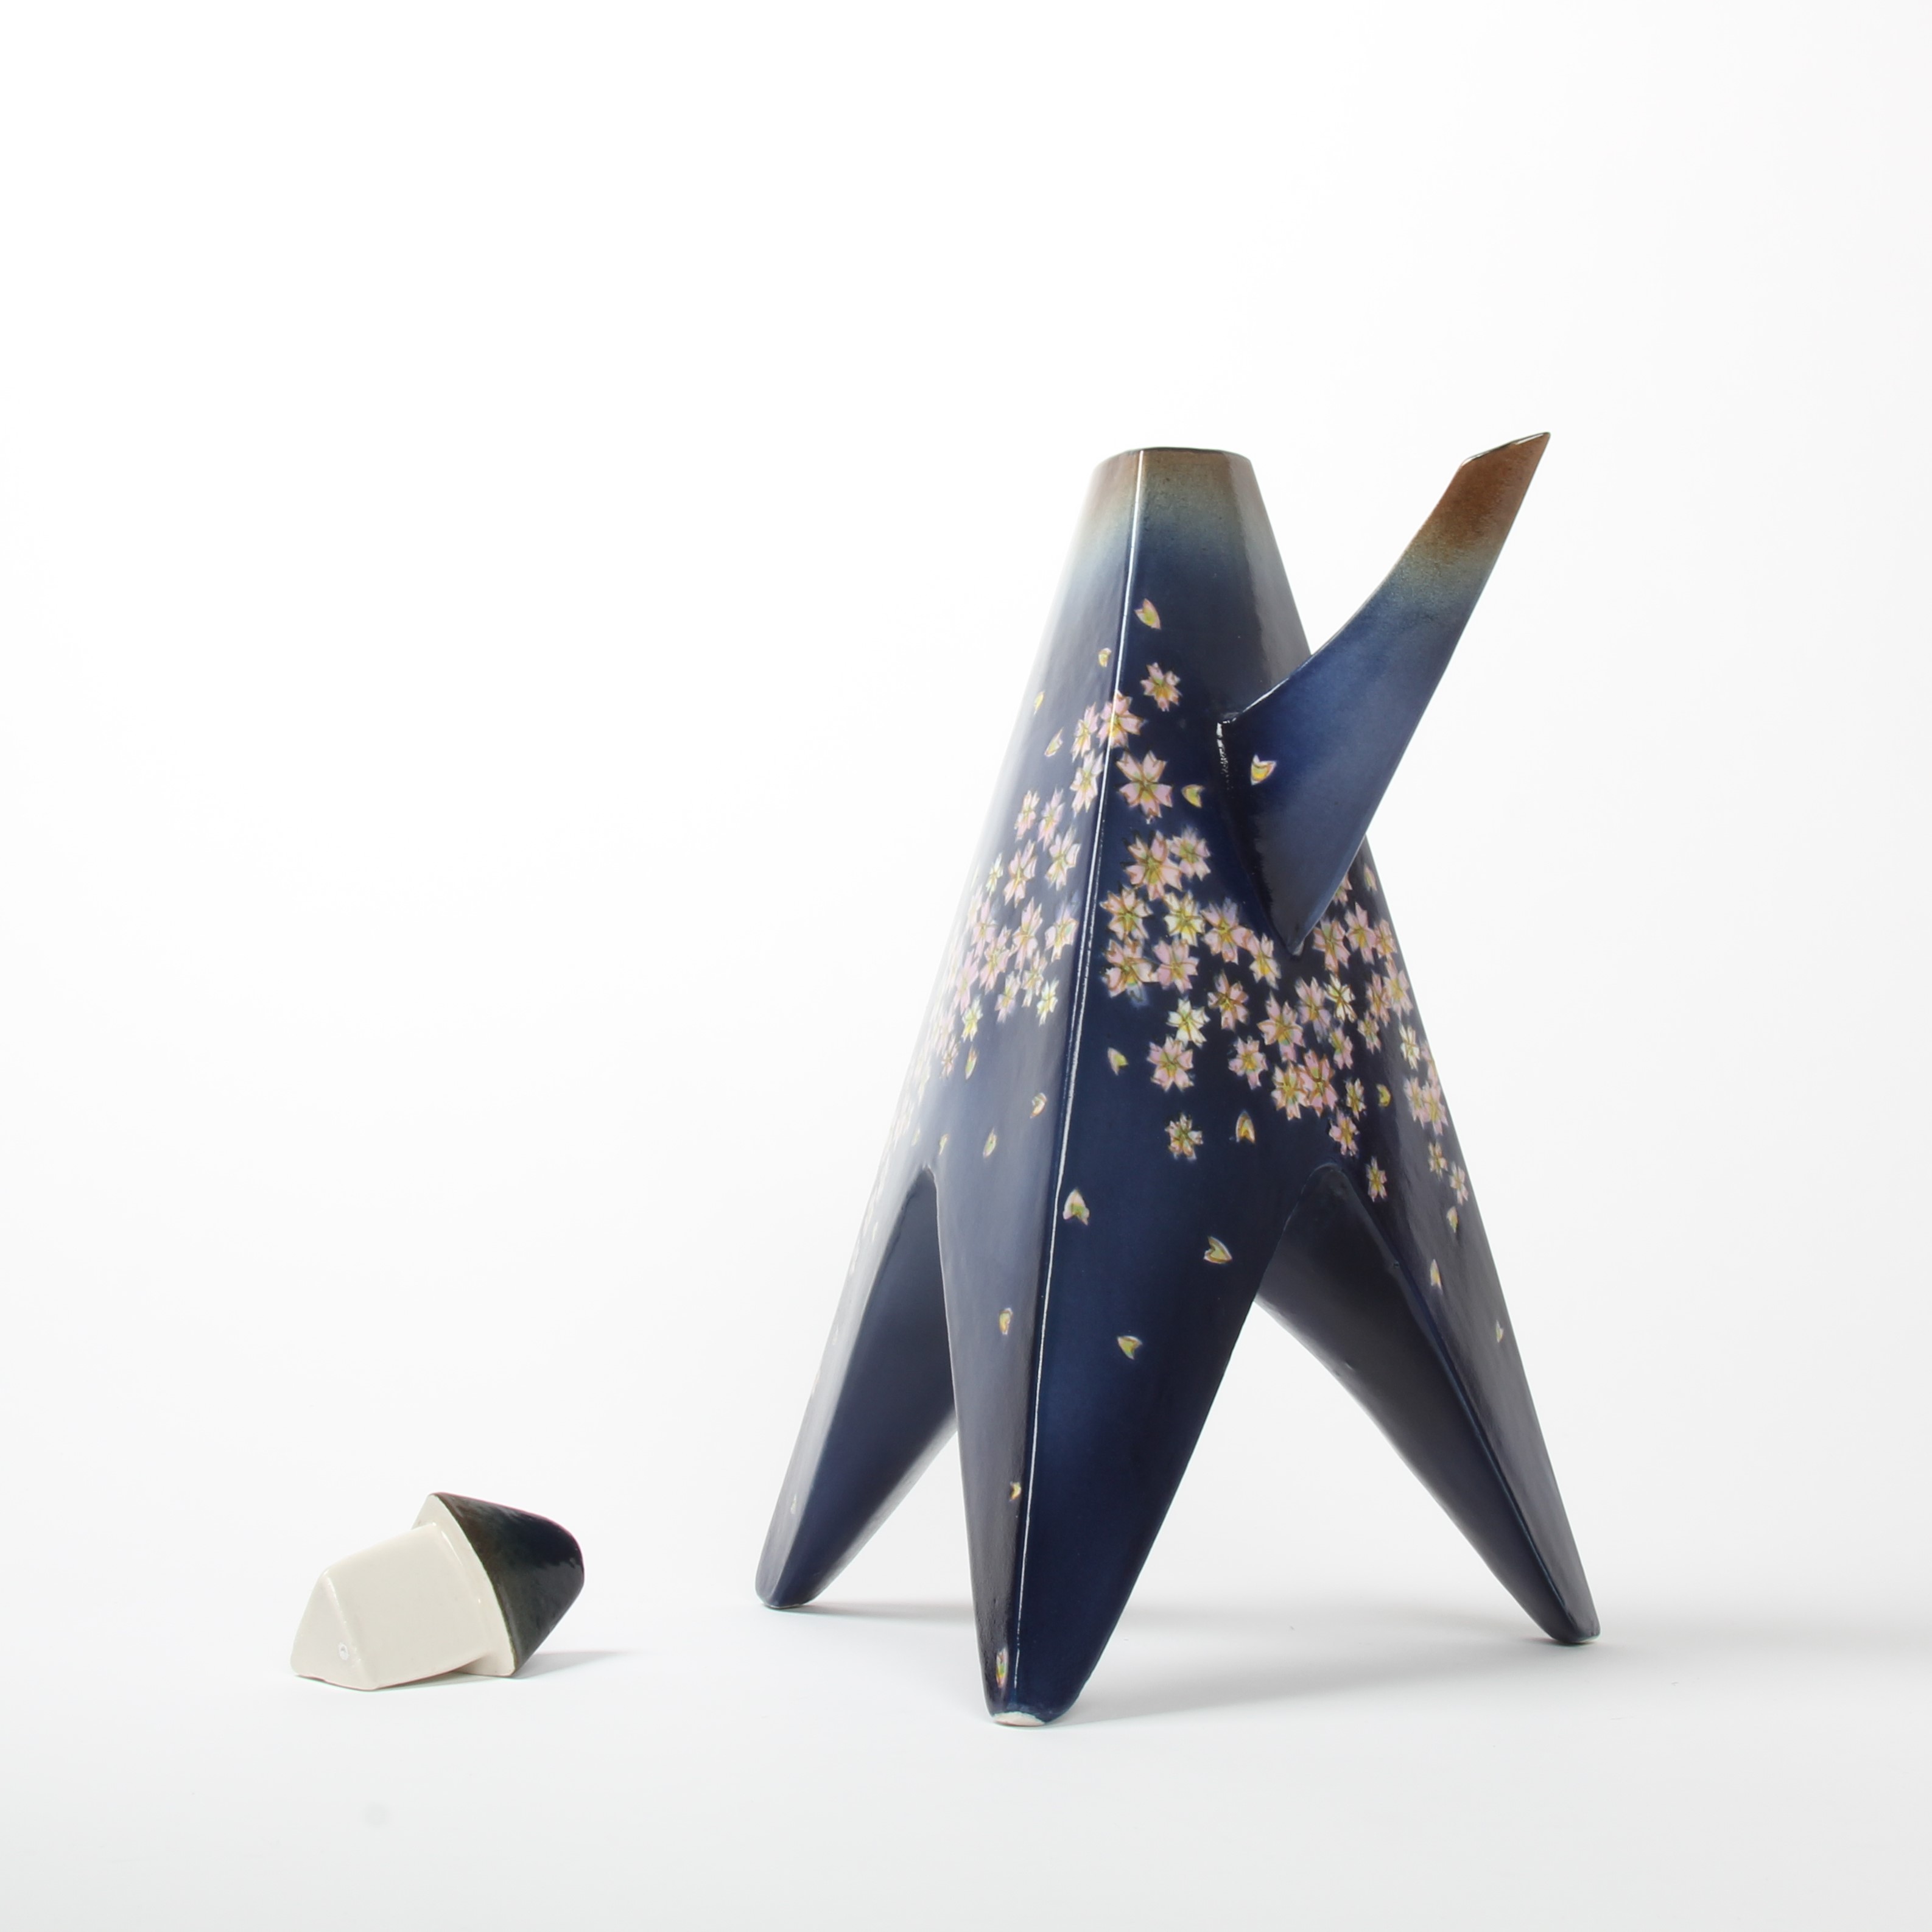 Kinichi Shigeno: Blue Floral Tripod Decanter Product Image 3 of 4